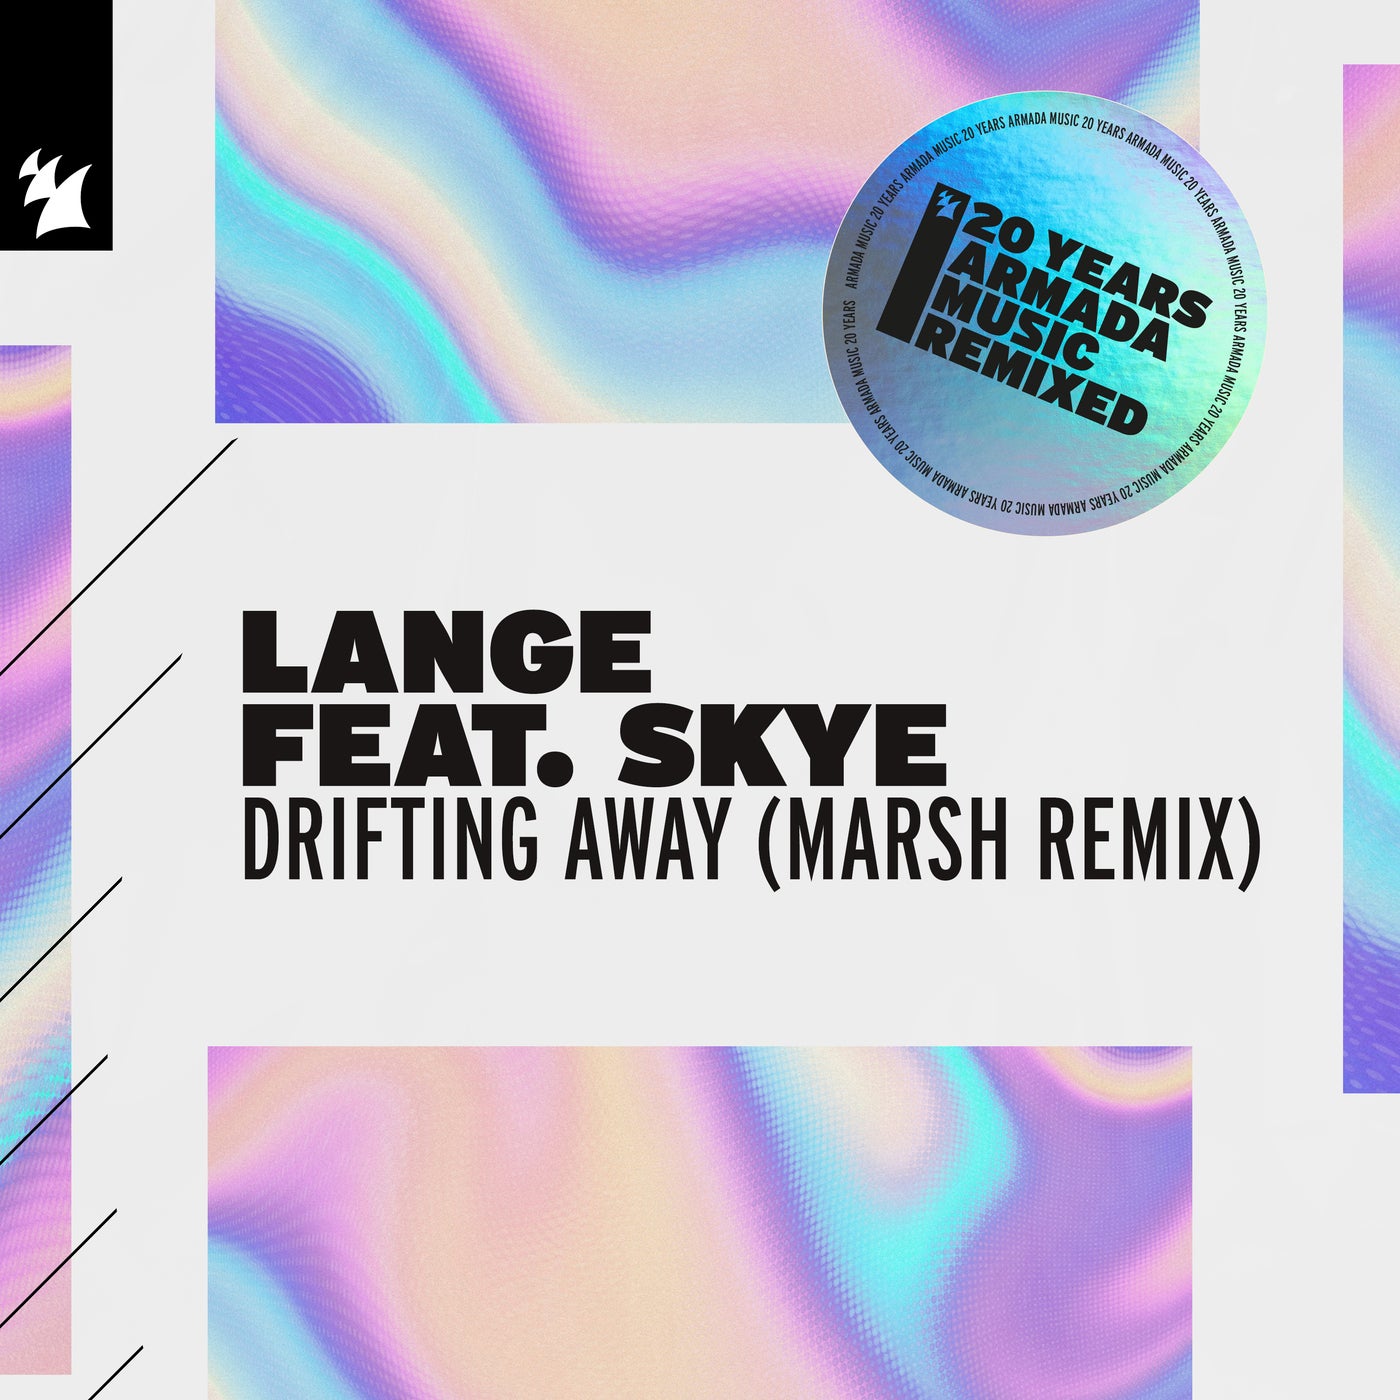 Drifting Away - Marsh Remix